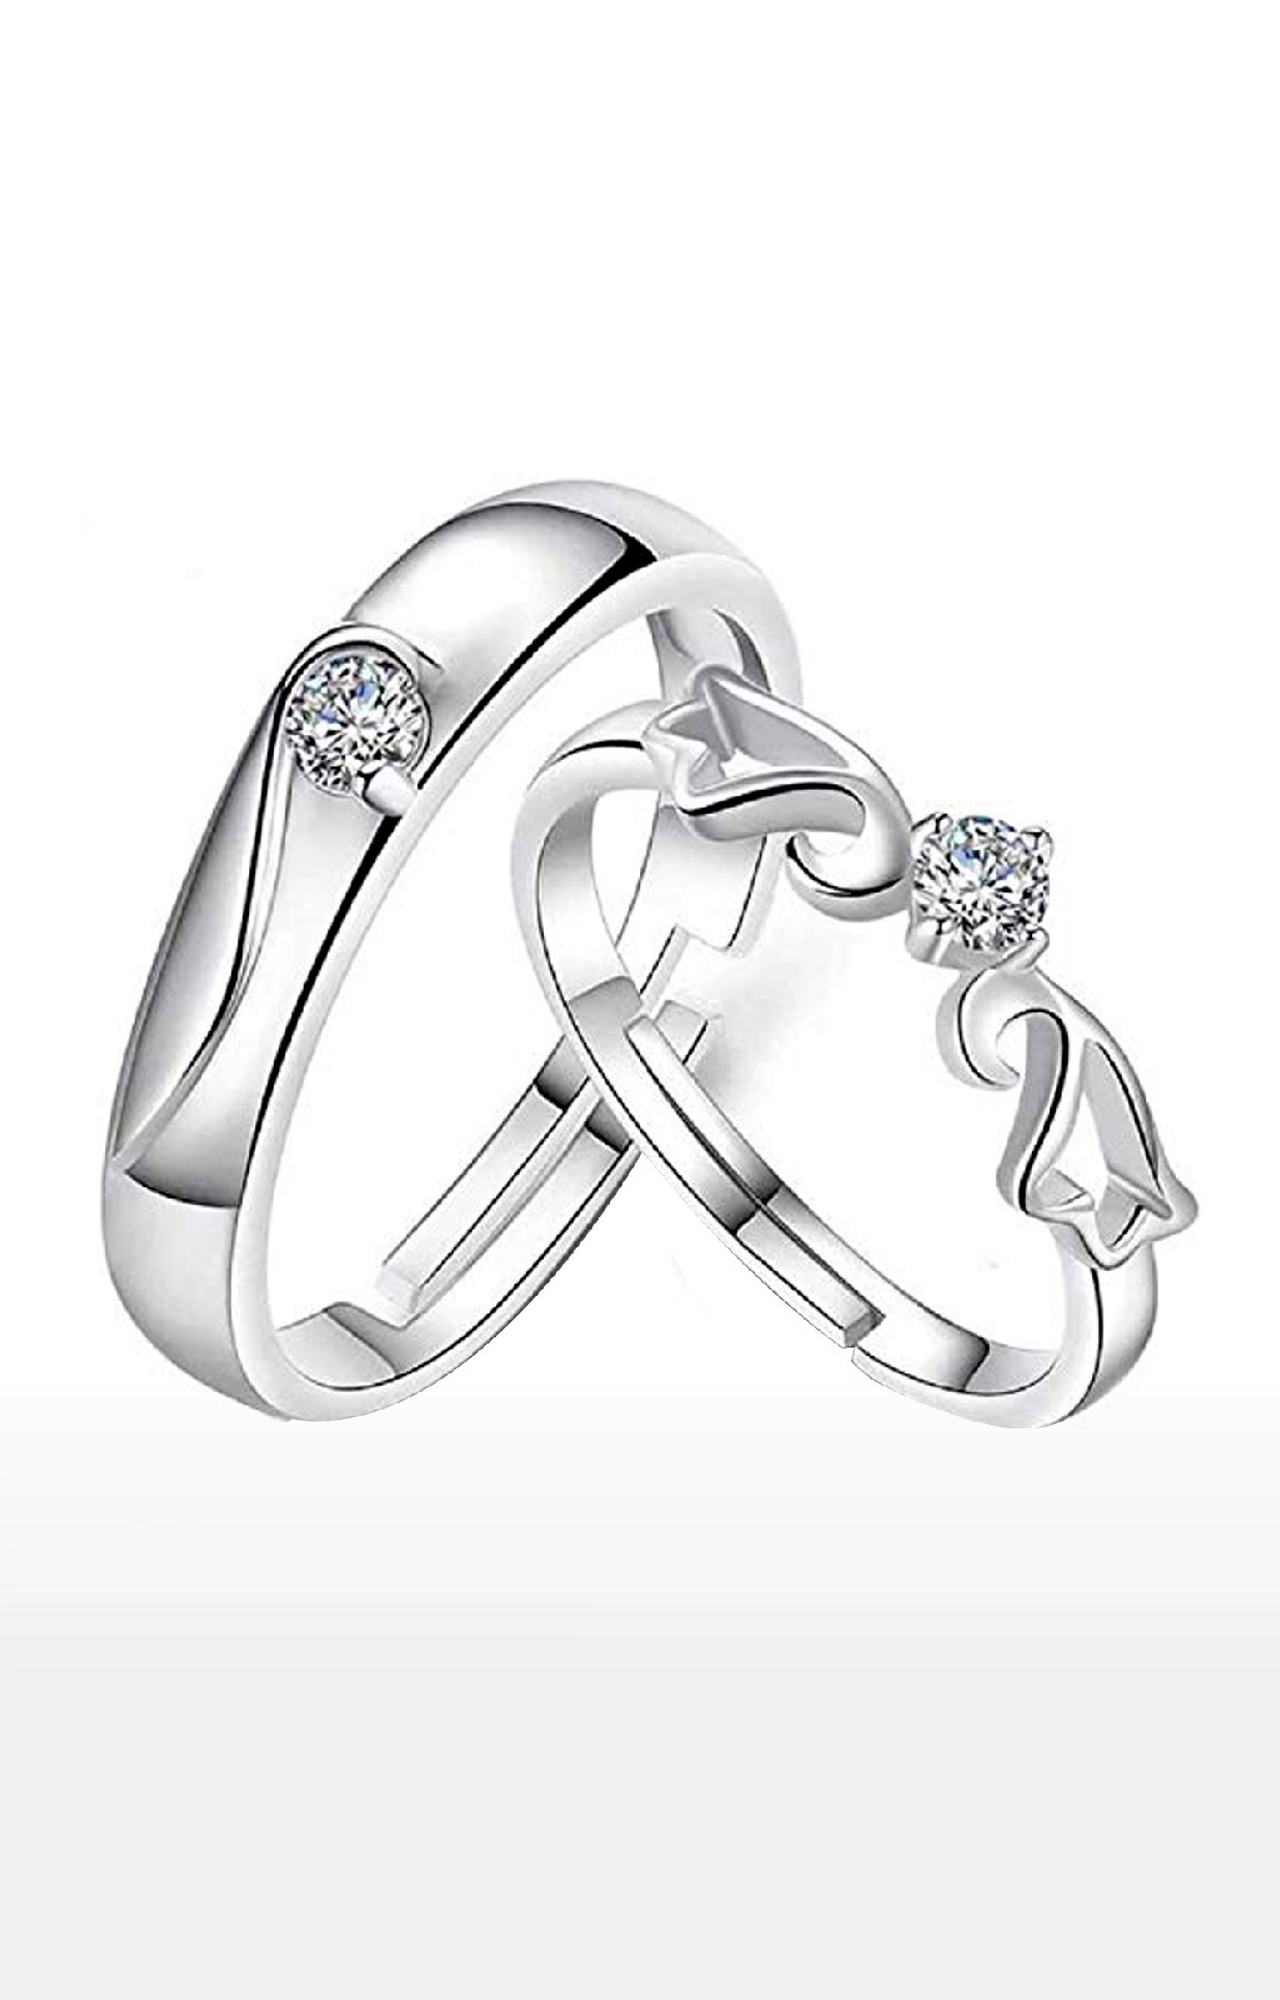 Love Bites Original Simple Design Sterling Silver Lovers Couple Rings